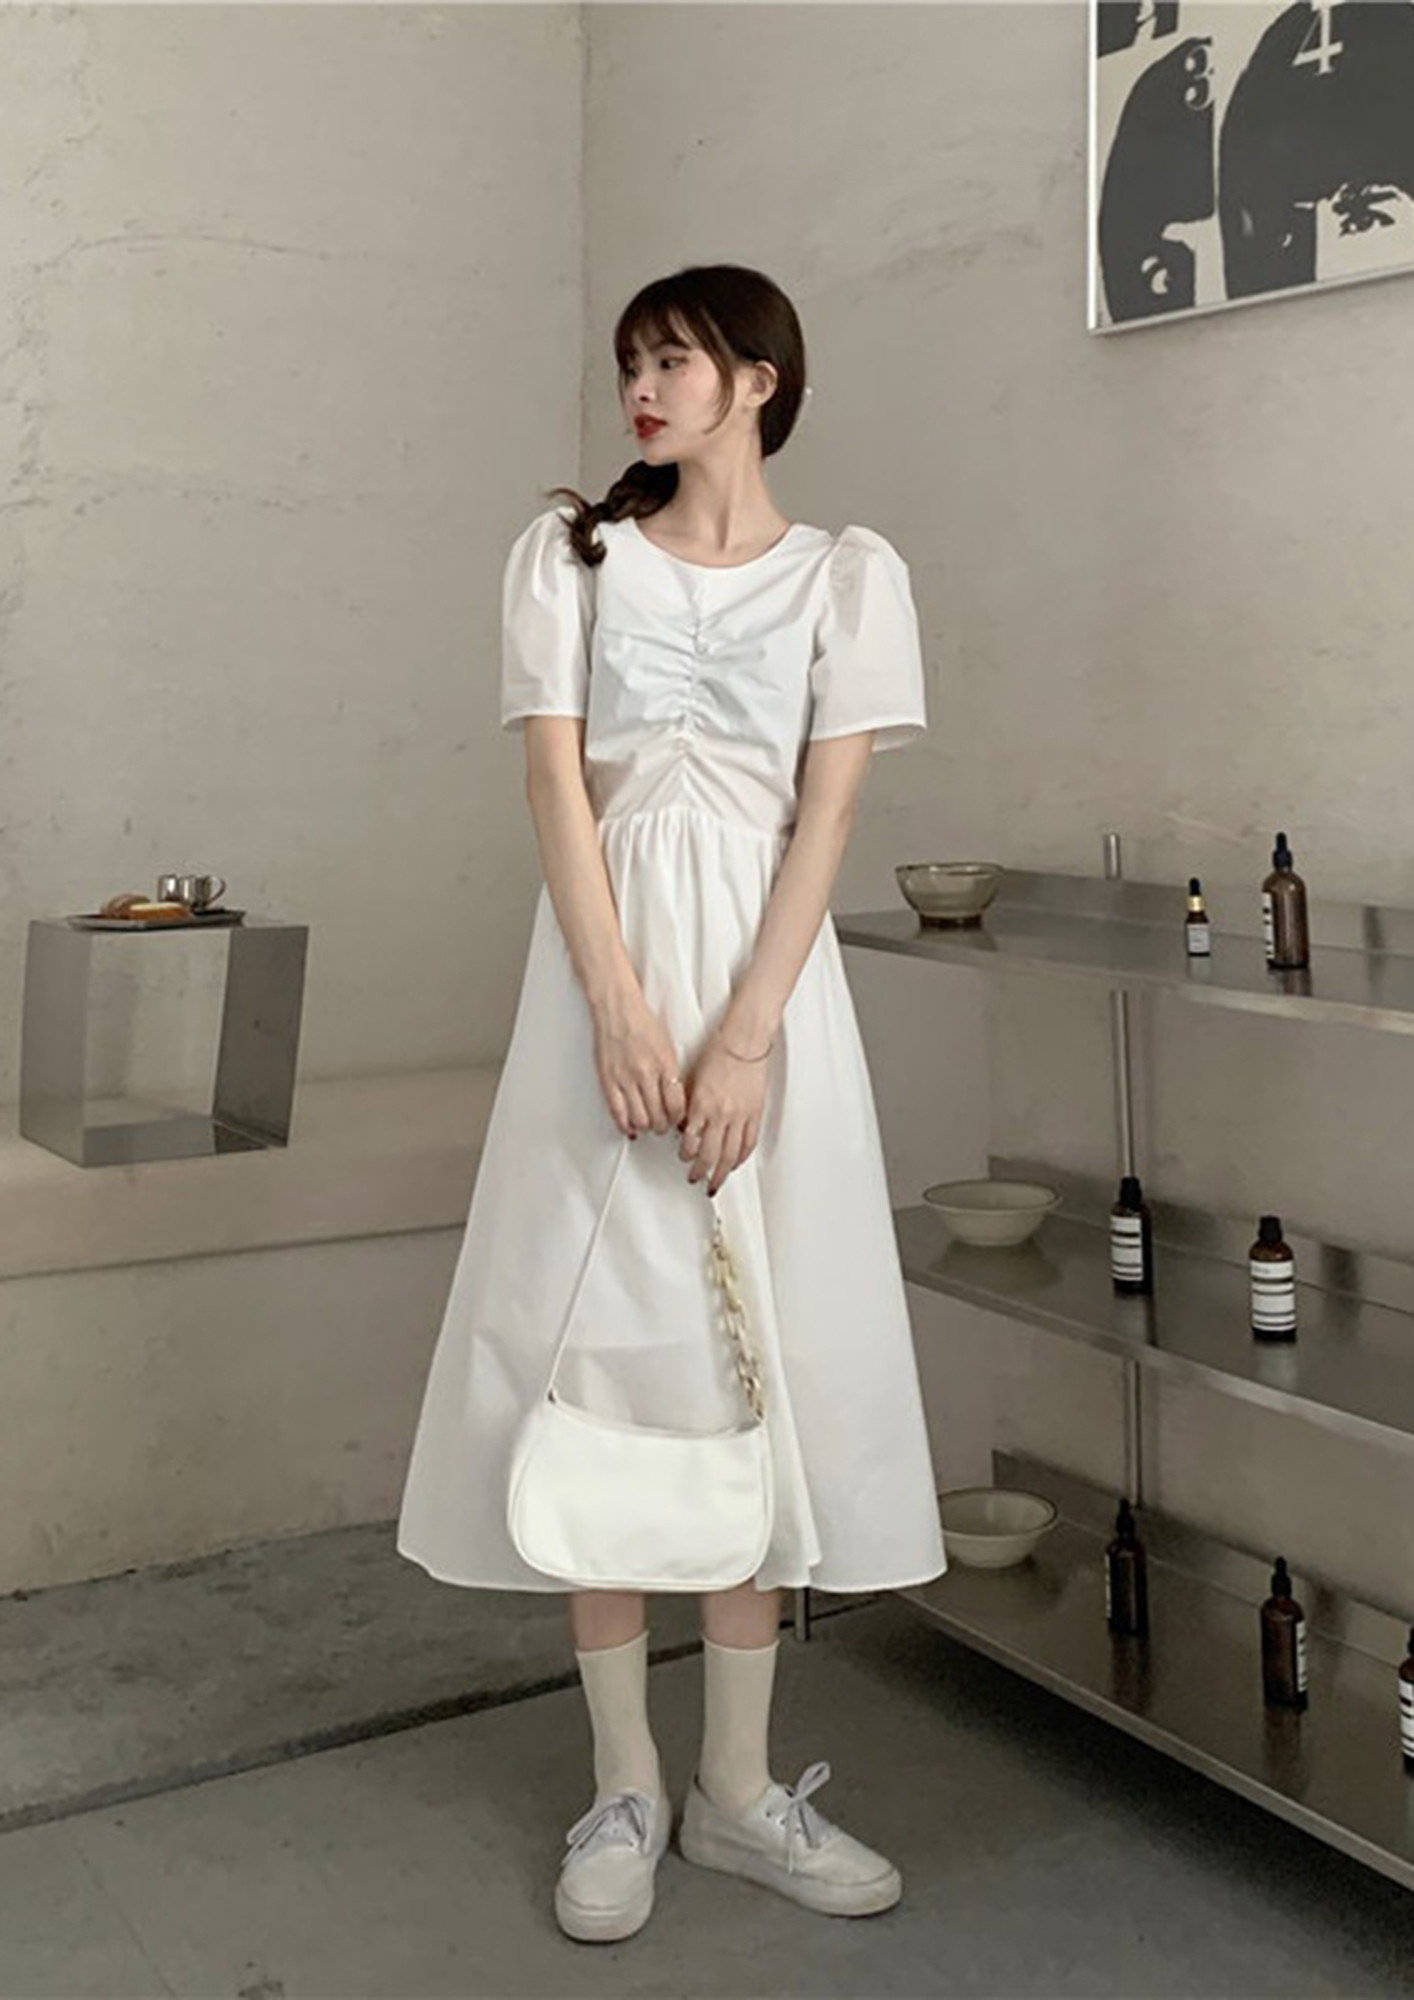 Korean dress Black and White Stock Photos & Images - Alamy